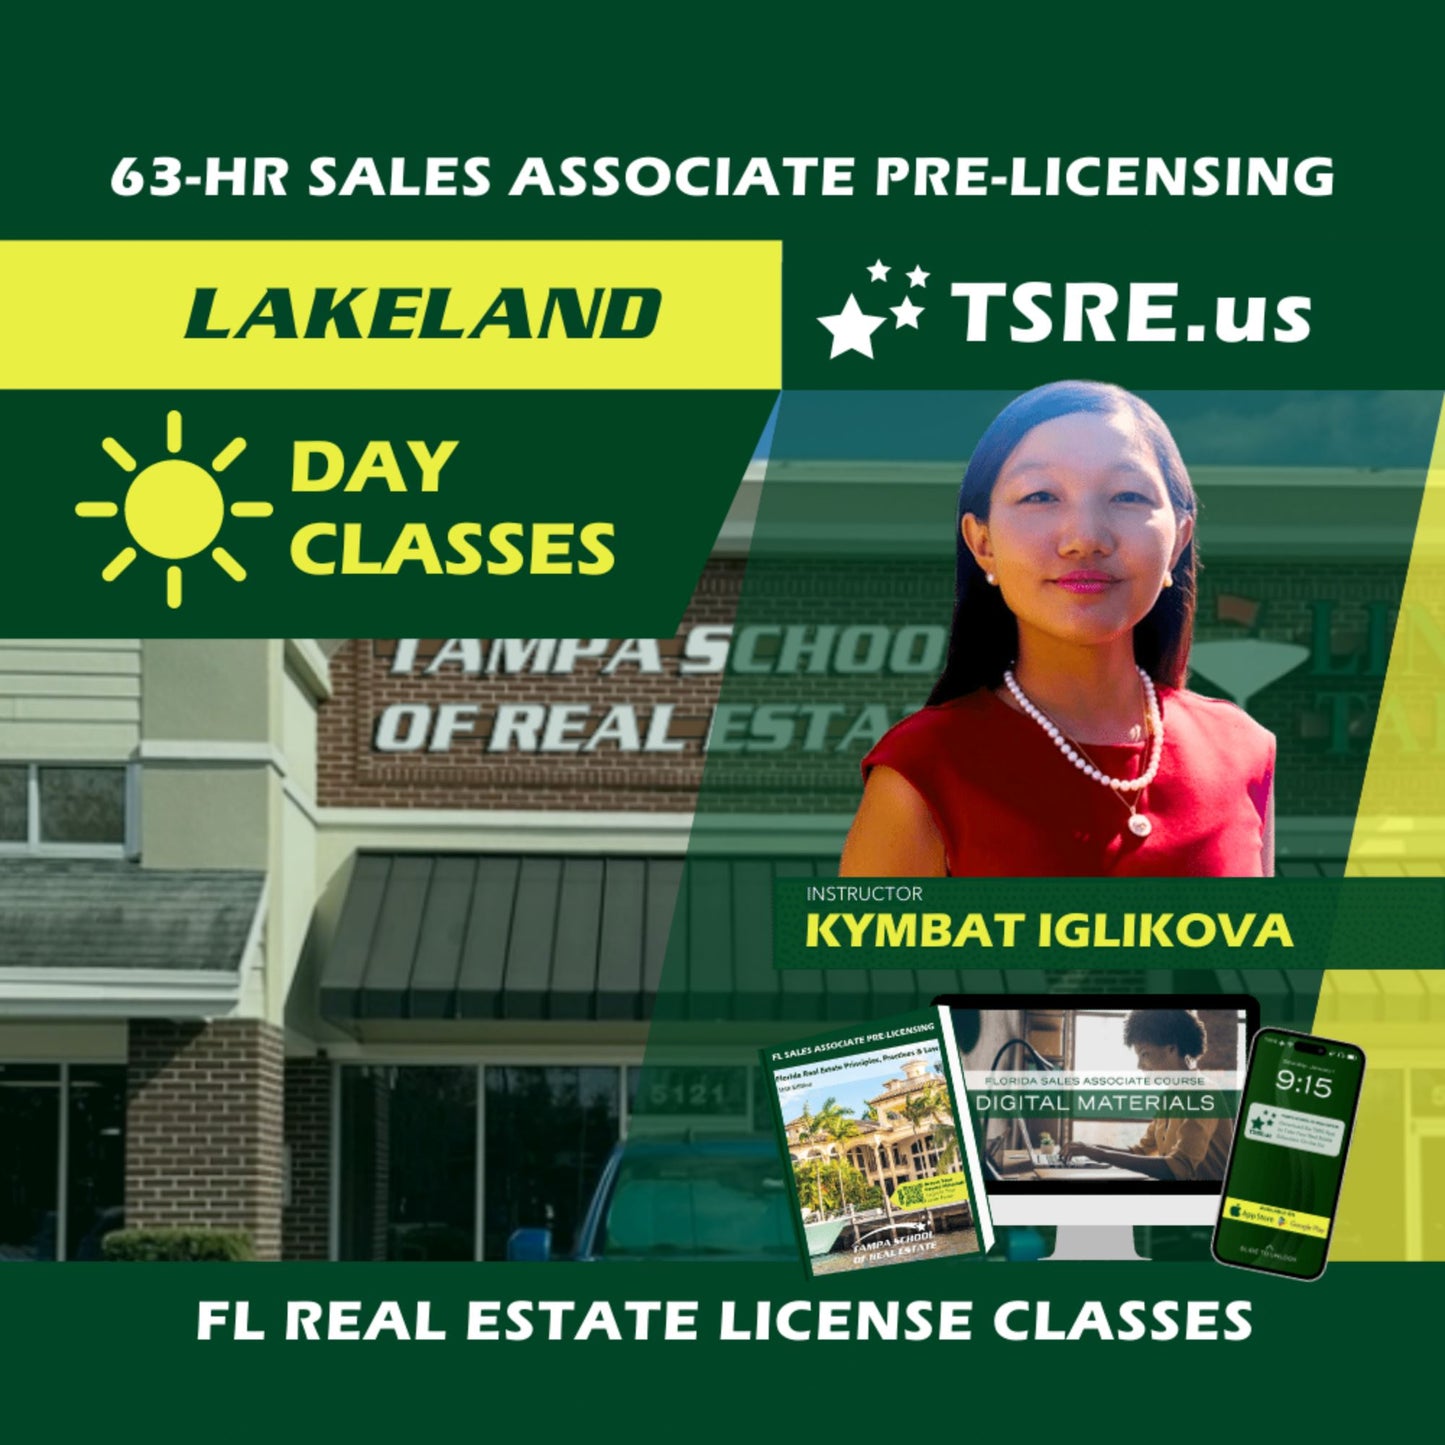 Lakeland | Mar 18 8:30am | 63-HR FL Real Estate Classes SLPRE TSRE Lakeland | Tampa School of Real Estate 